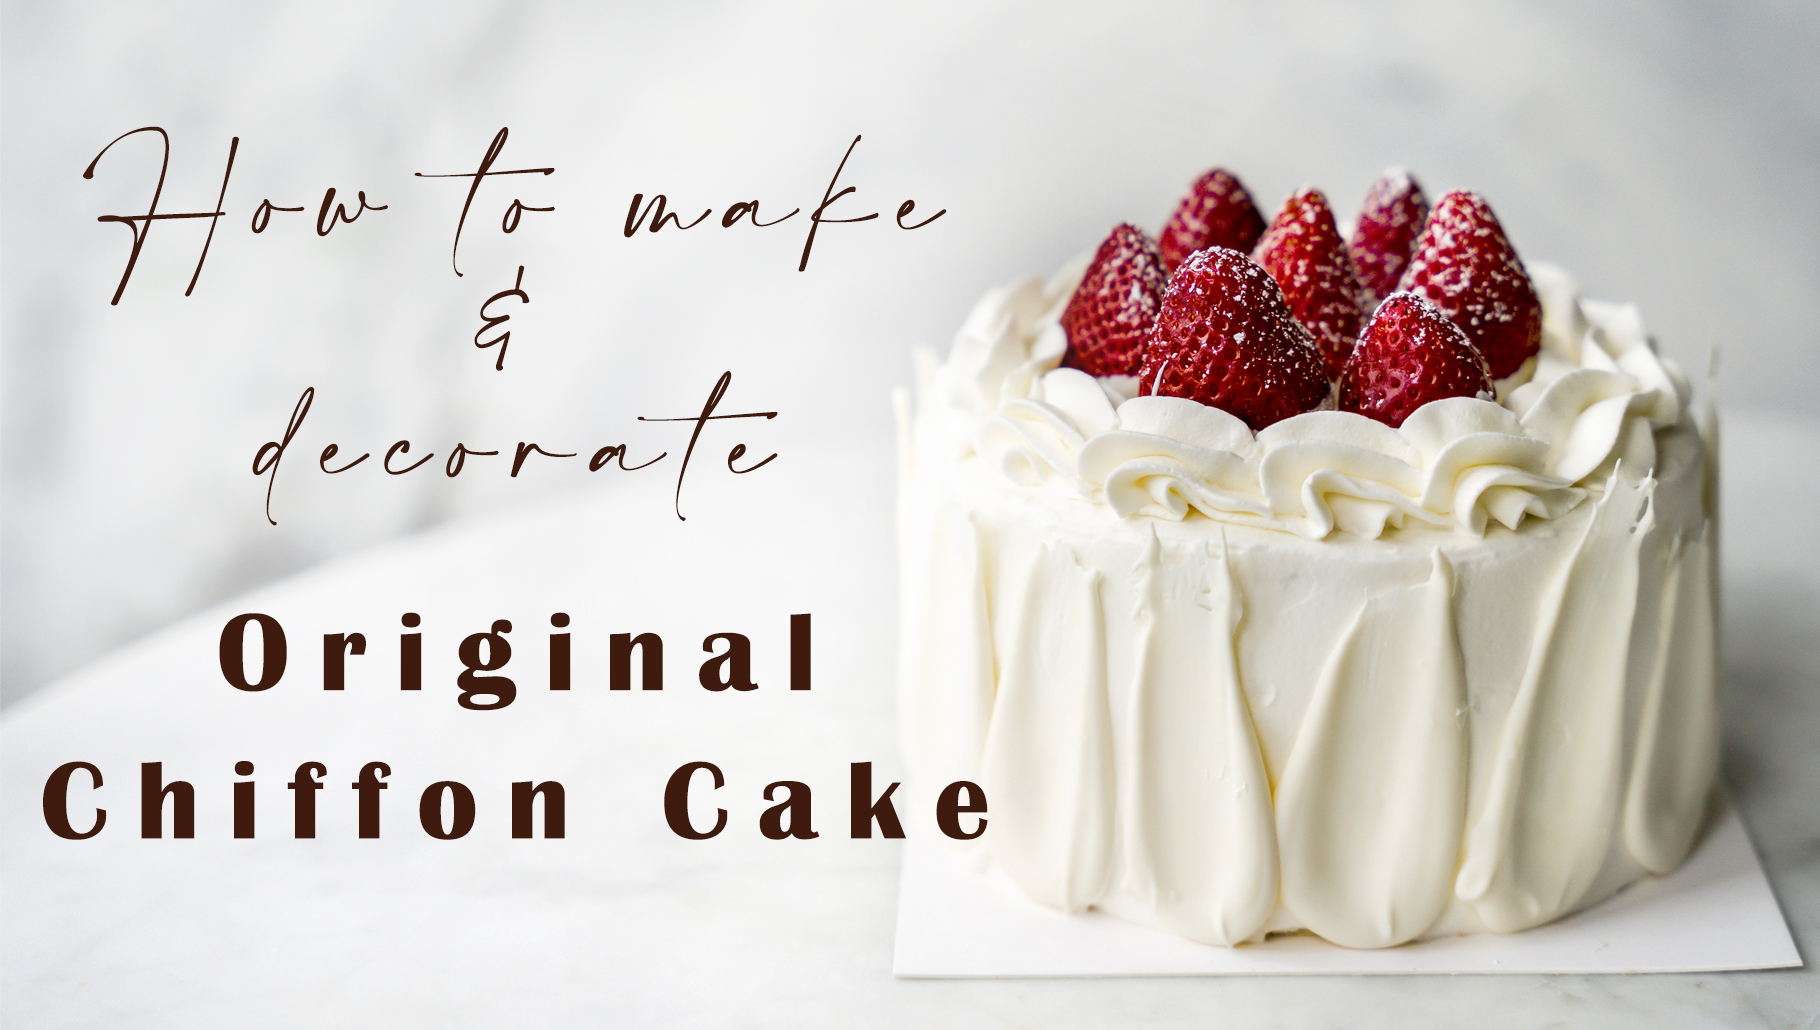 Original Strawberry Chiffon Cake – How to make and decorate!